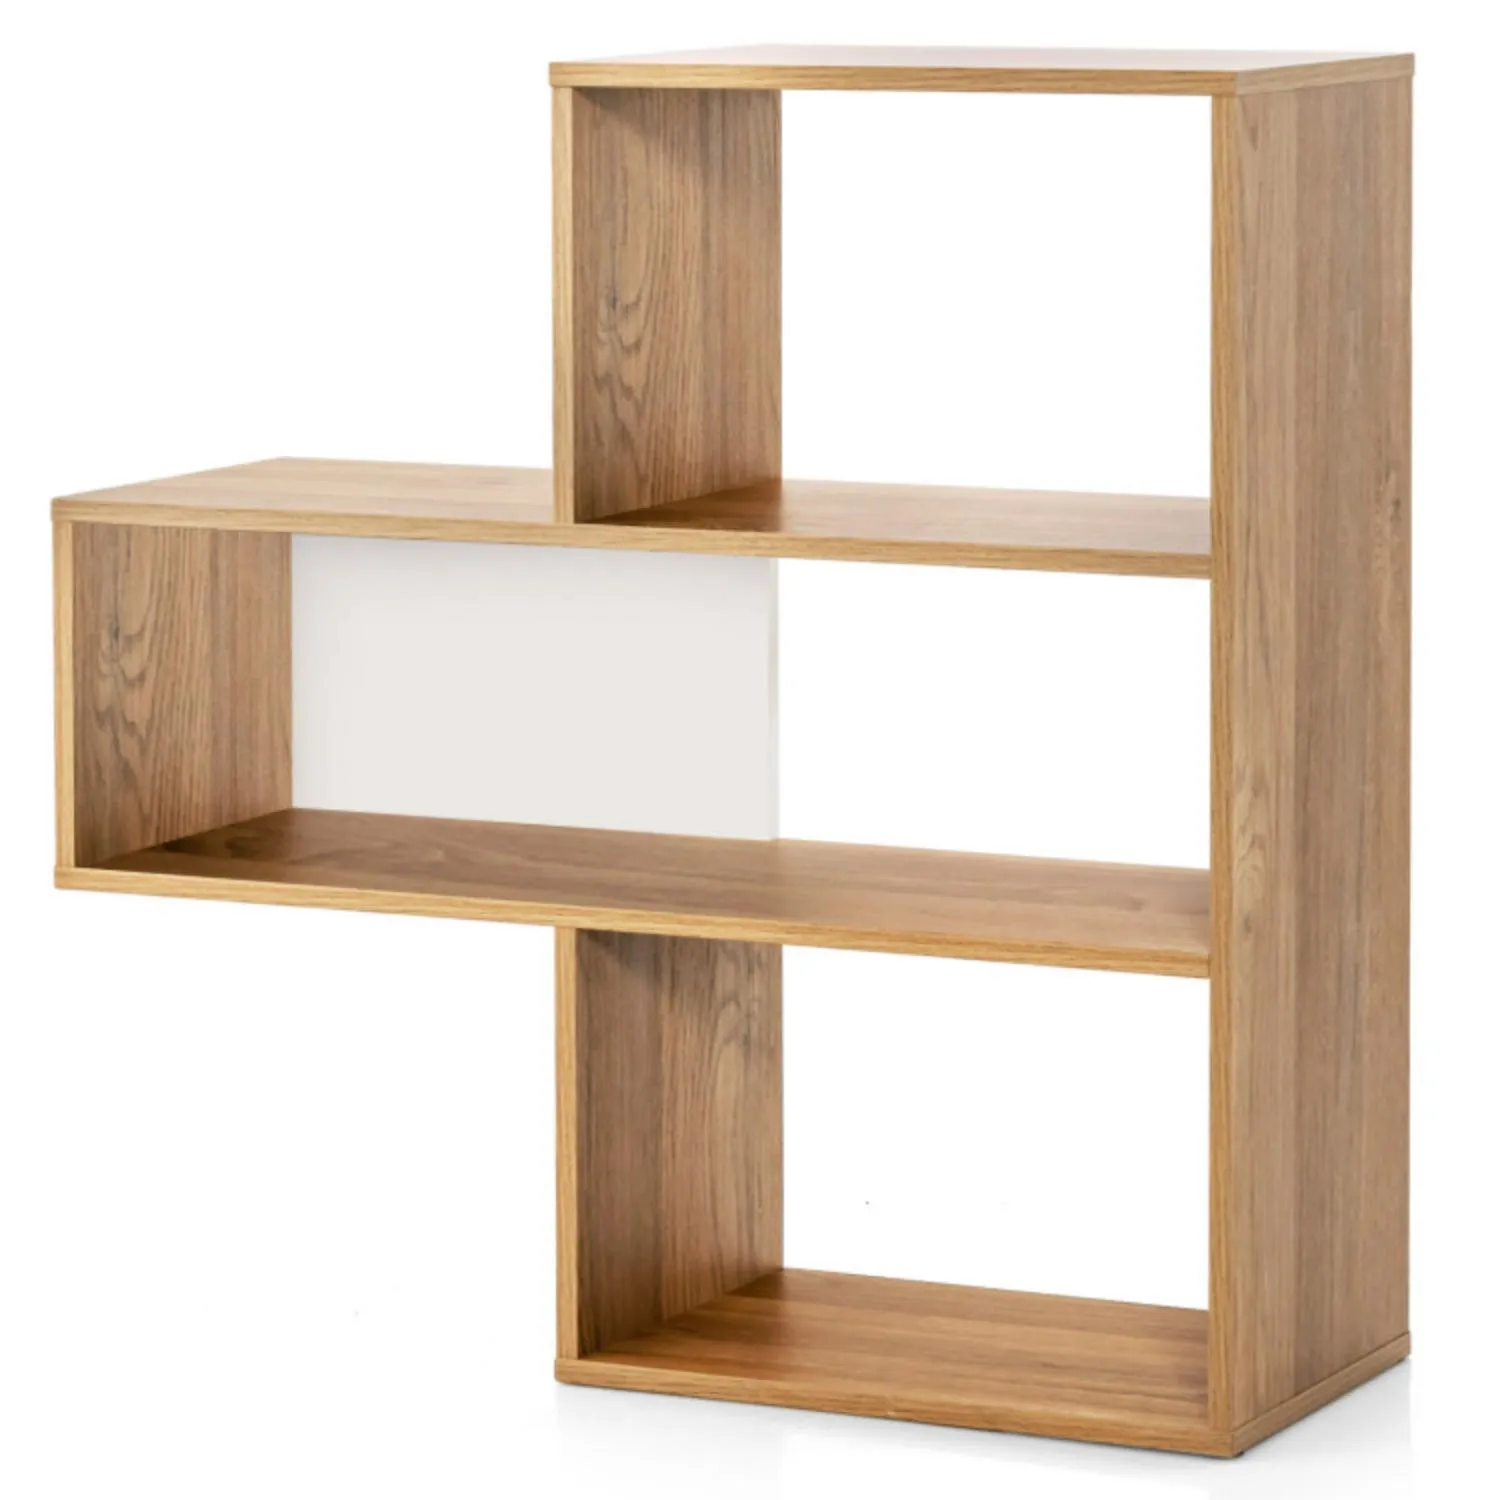 Hivvago Convex Bookshelf 3-Shelf Open Bookcase Room Organizer with Anti-Toppling Device